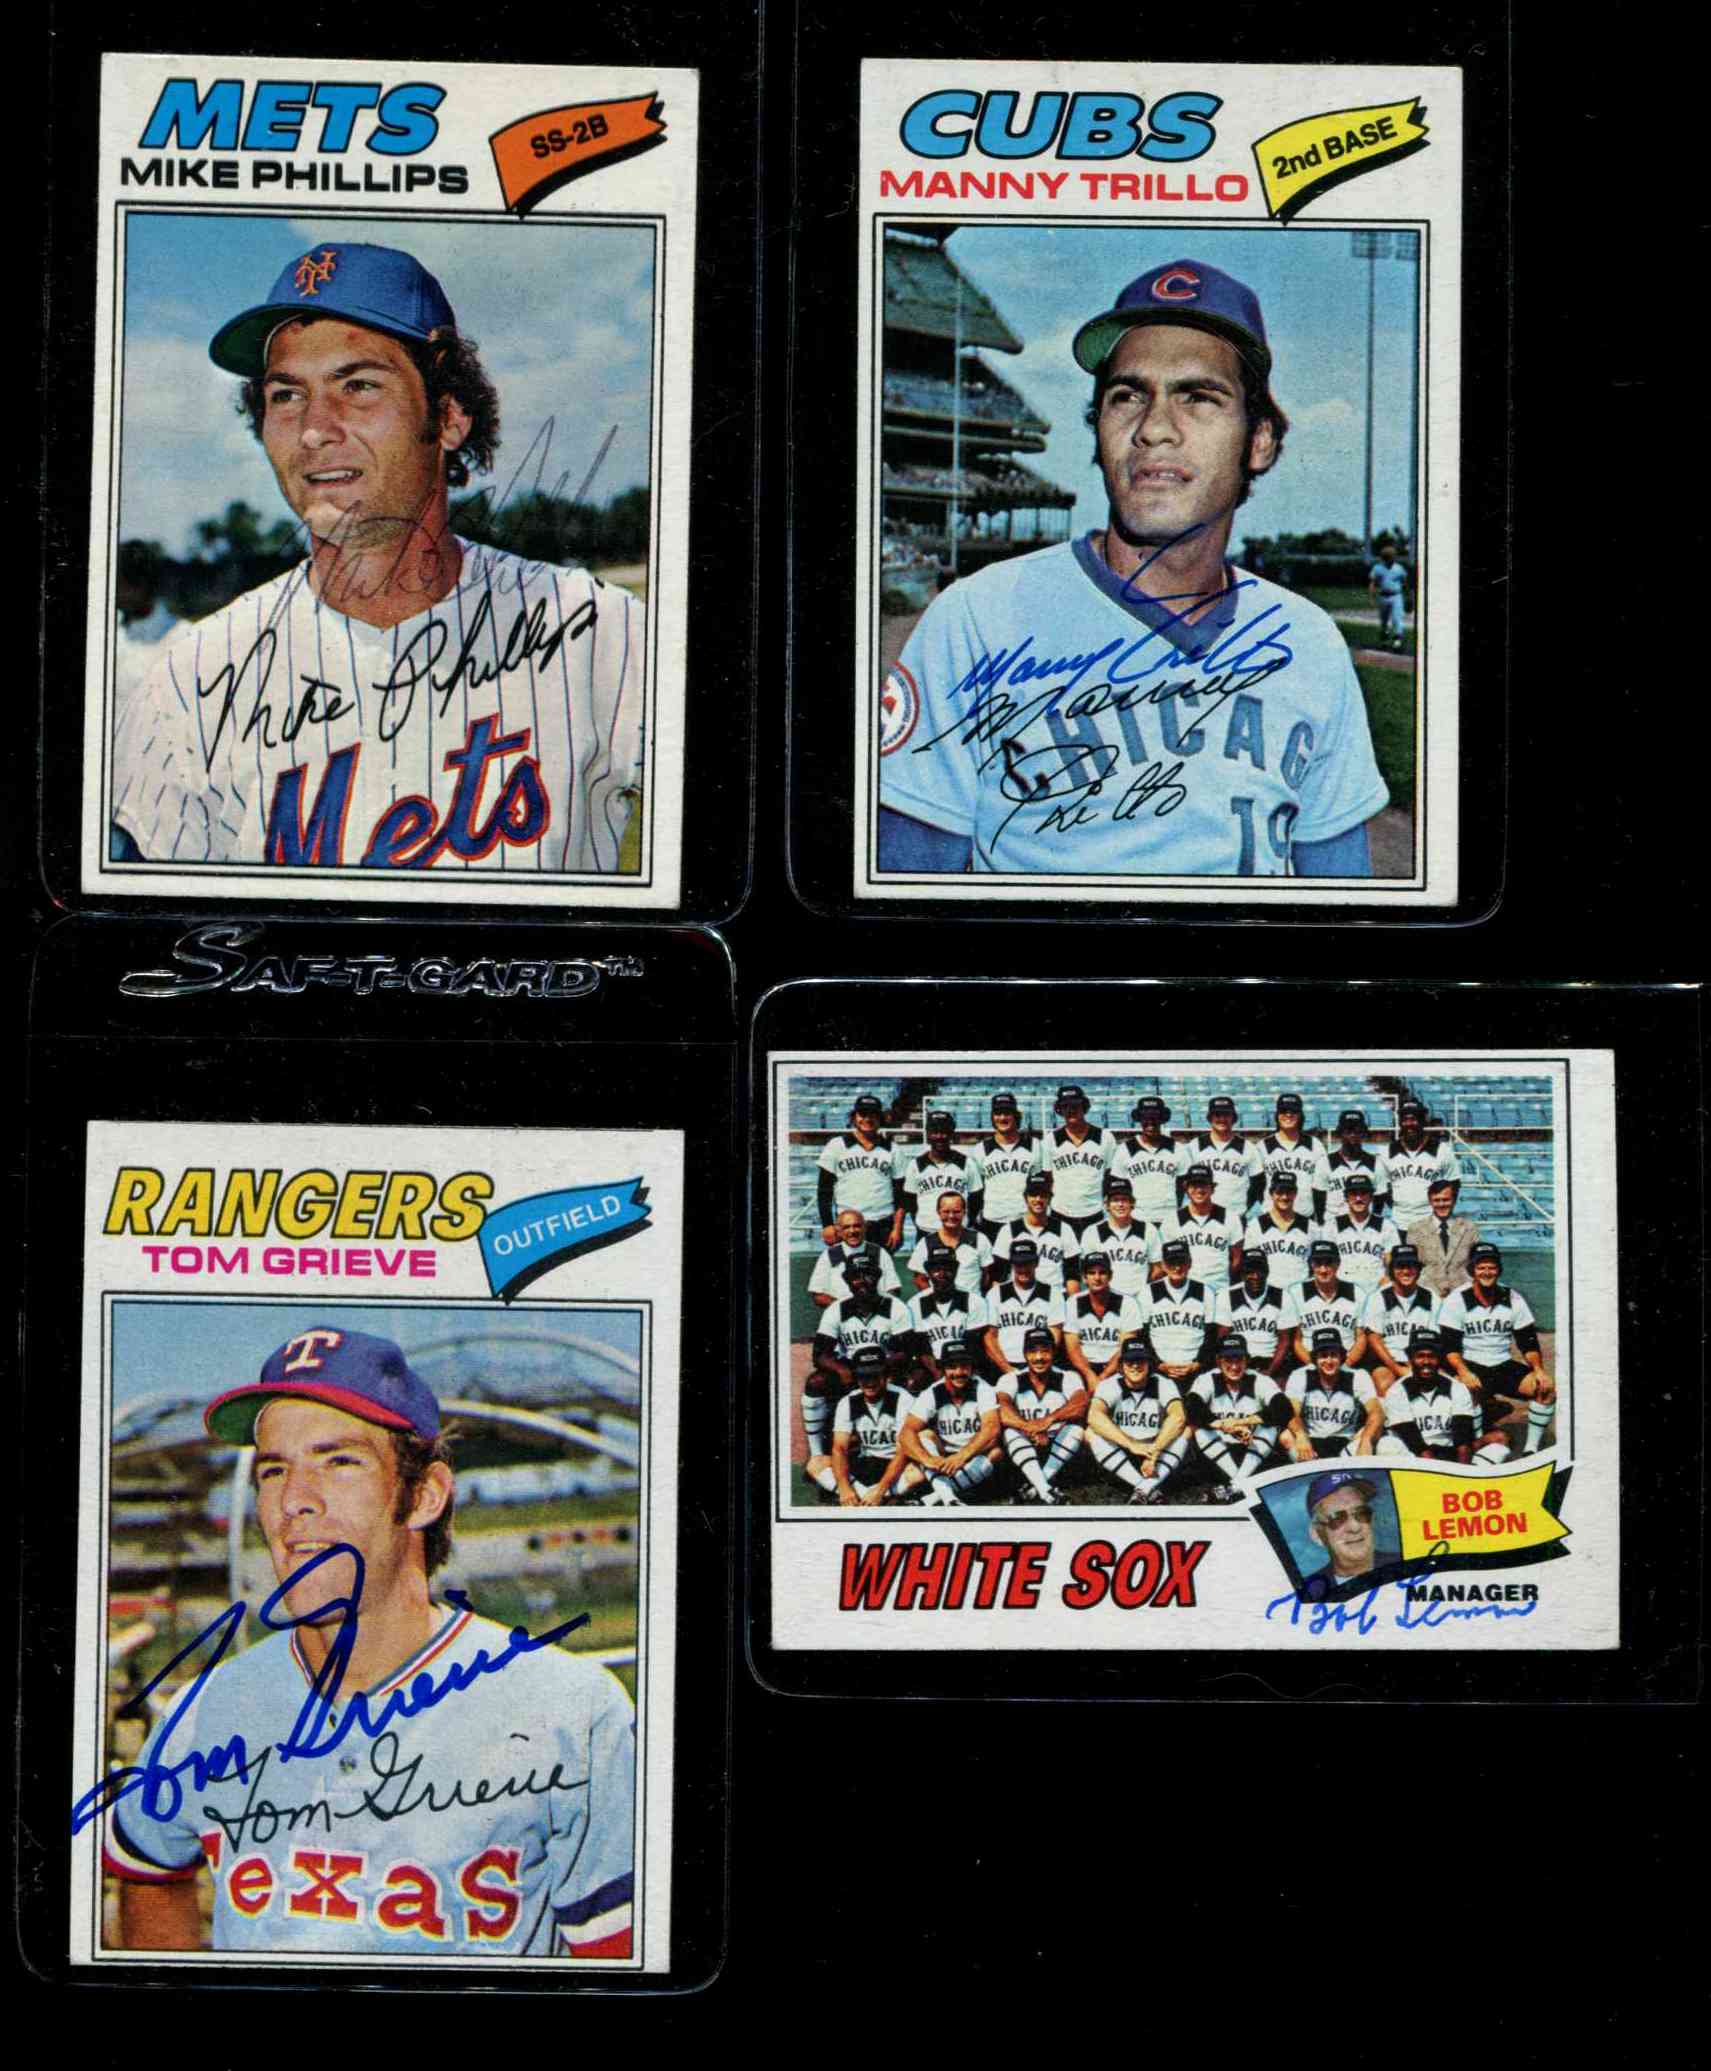 AUTOGRAPHED: 1977 Topps #418 BOB LEMON White Sox TEAM card w/PSA/DNA LOA Baseball cards value